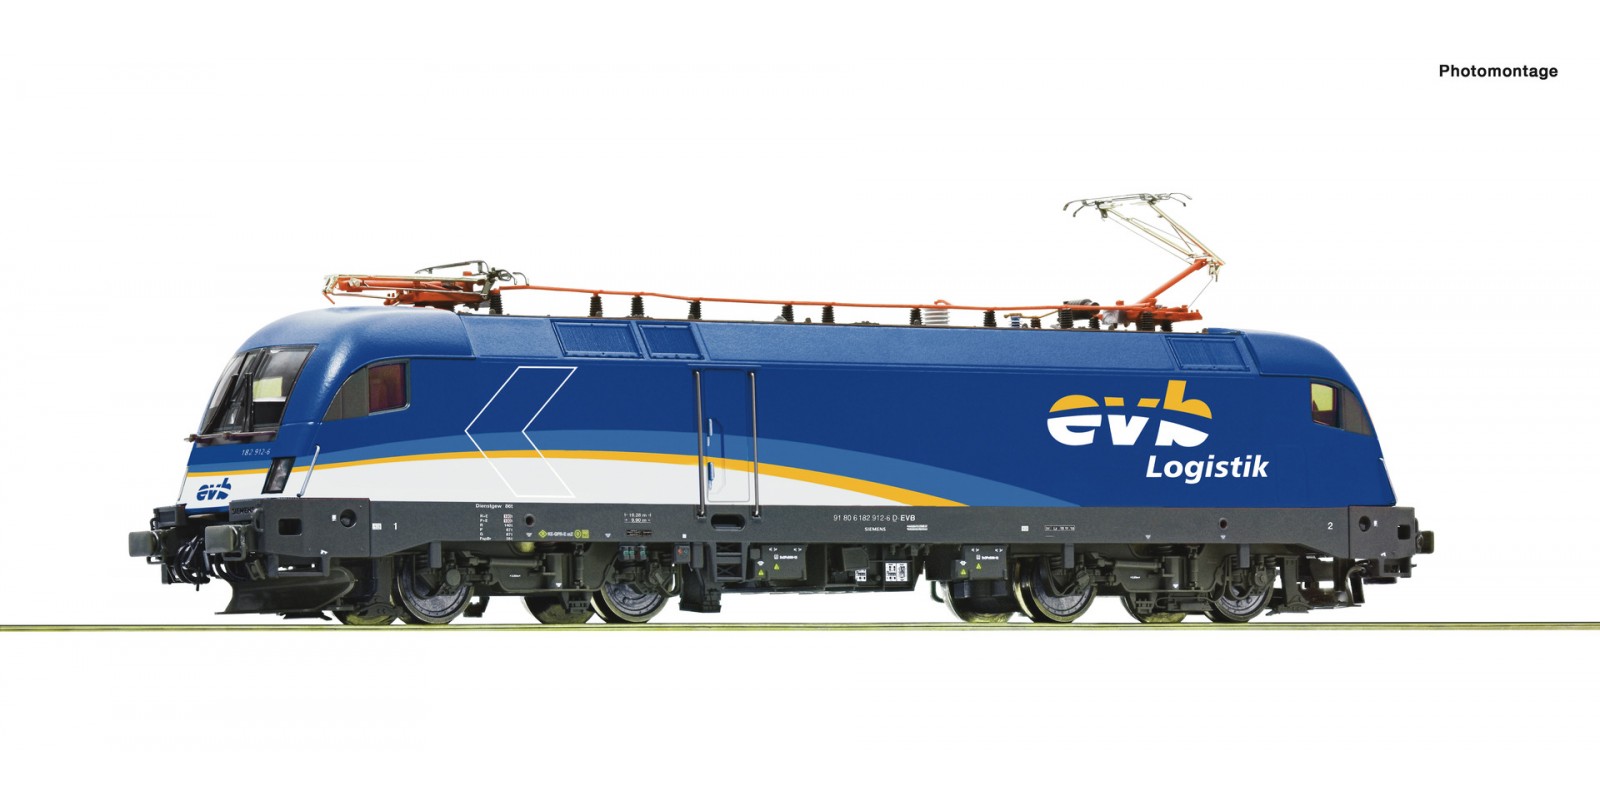 RO78525 Electric locomotive 182 911-8 EVB